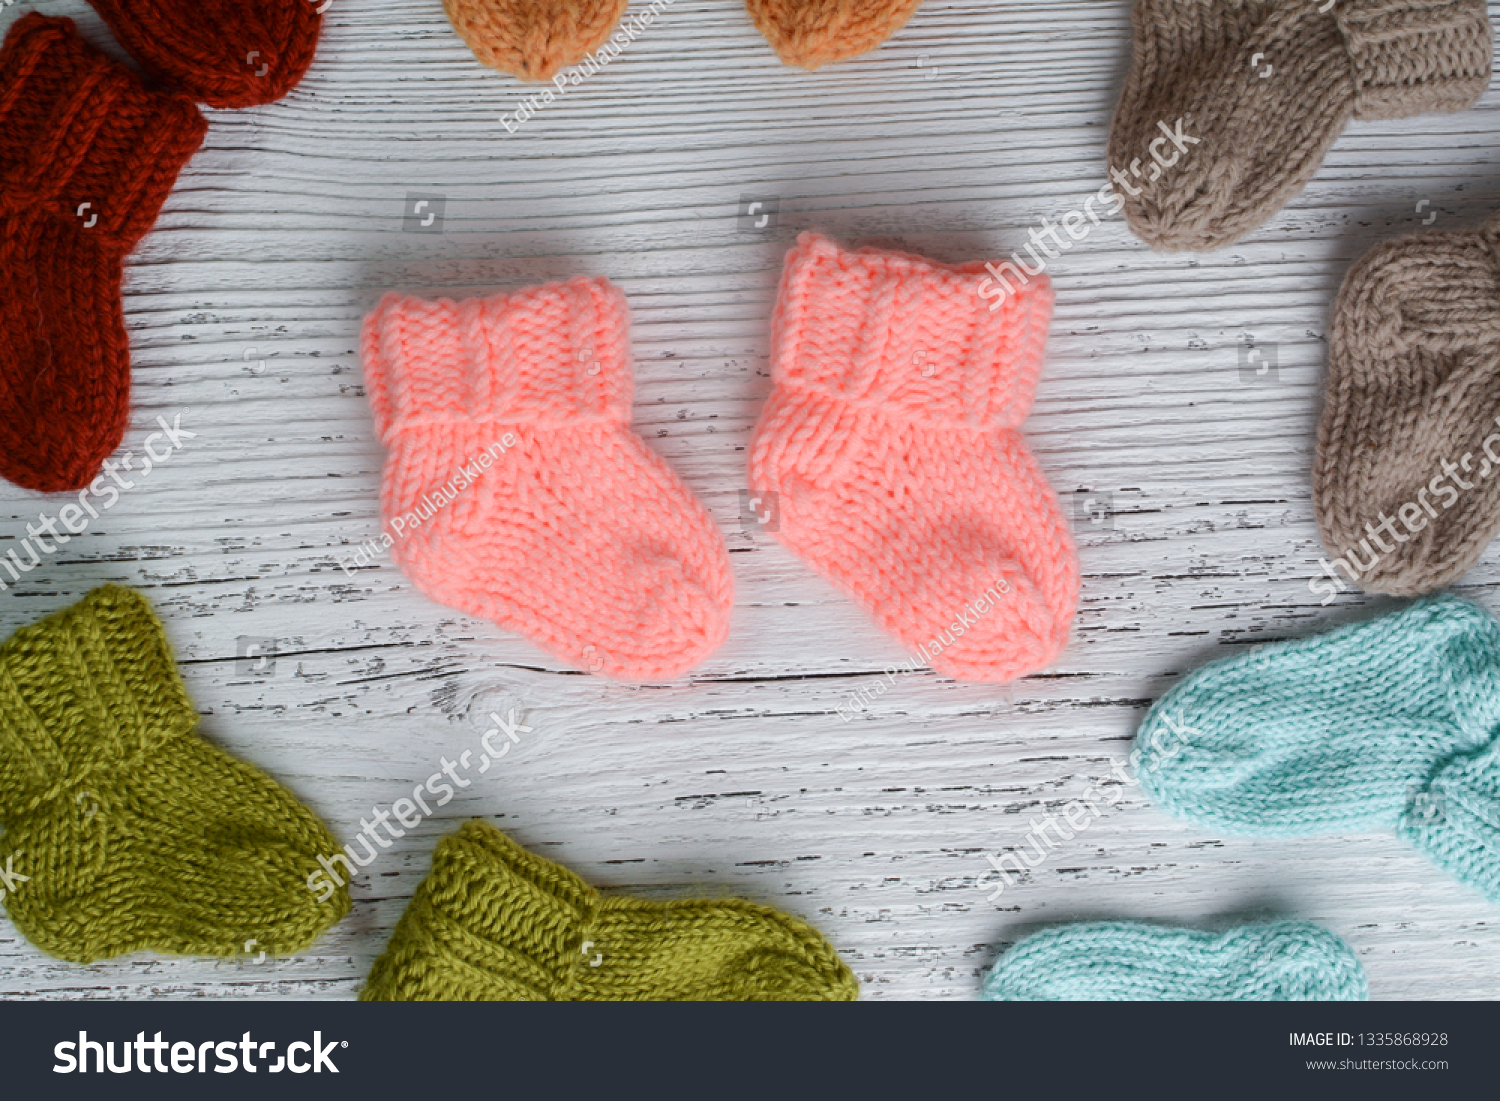 premature baby socks